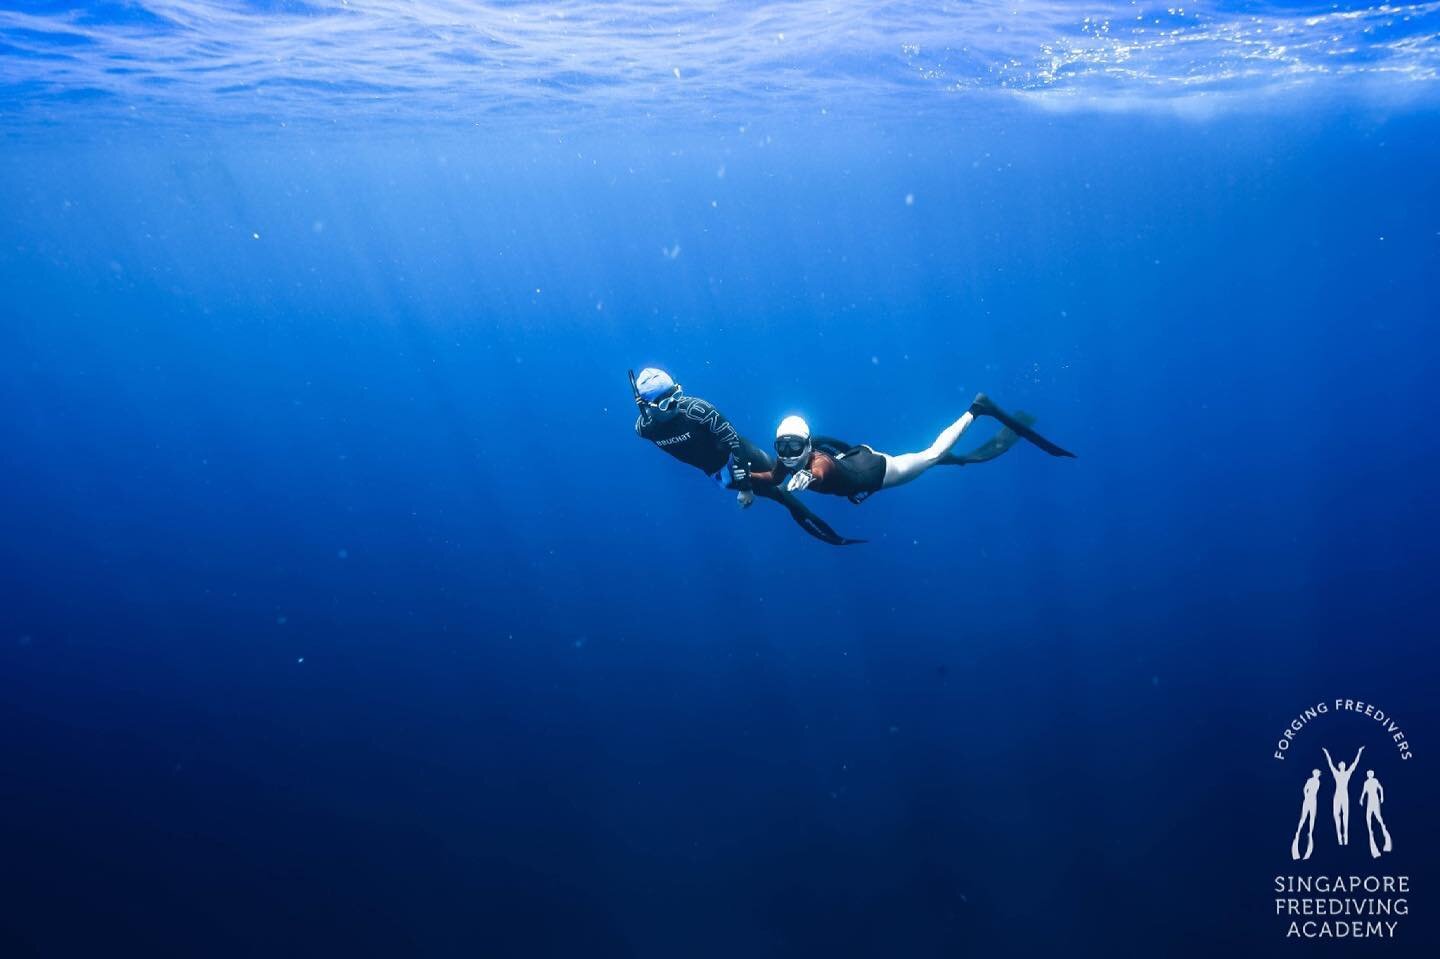 Diving with your favorite person 💞
&bull;
📸: @yeehuiii 
&bull;
#apneasg #divetrip #freedive #freediving #sgfreedivers #freedivesg #freediveislife #sfa #singaporefreedivingacademy #SSI #IAMSSI #saltylife #getaway #holiday #bigblue #101reasonstofreed